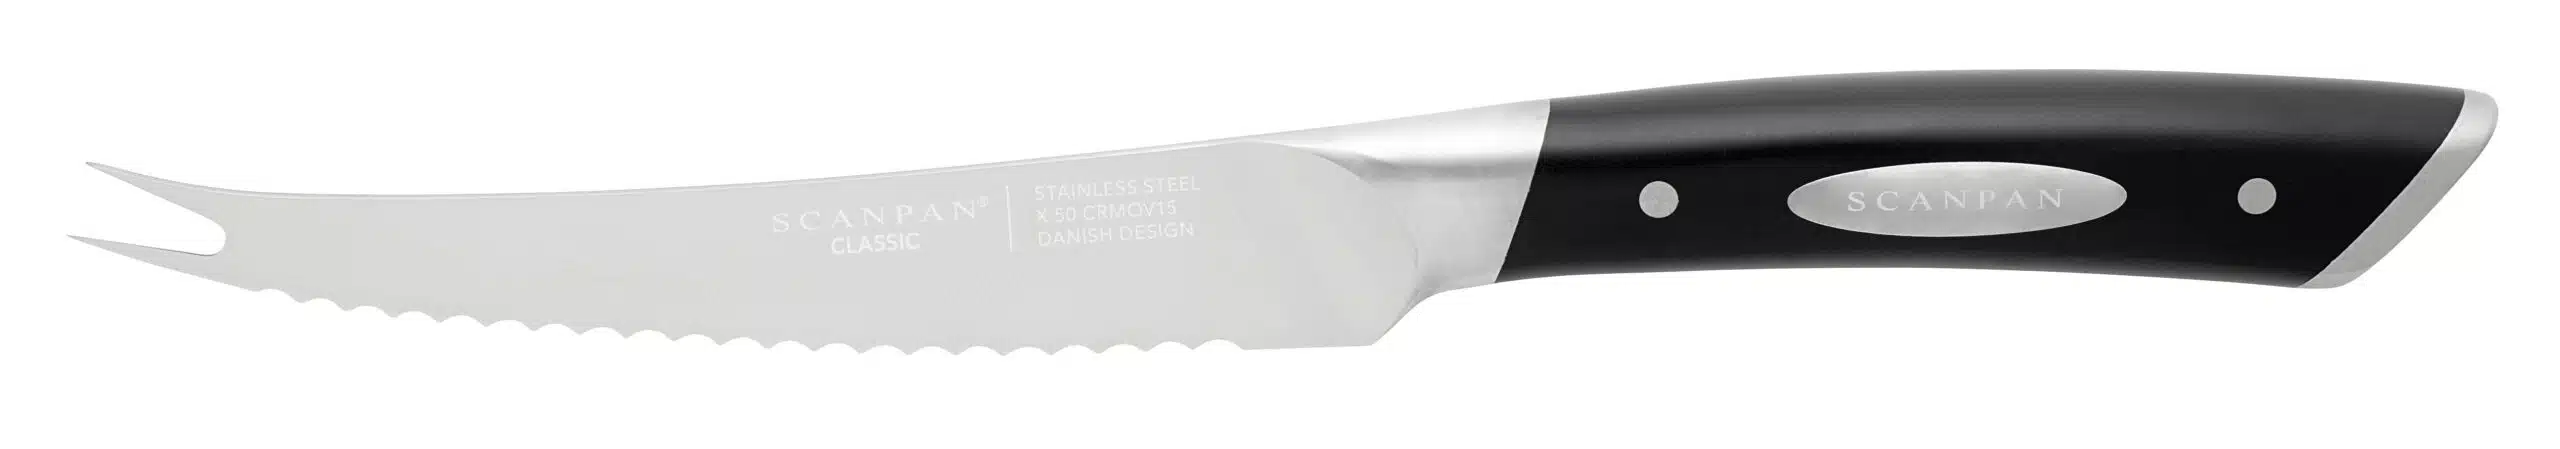 Scanpan Classic Tomato & Cheese Knife 14cm